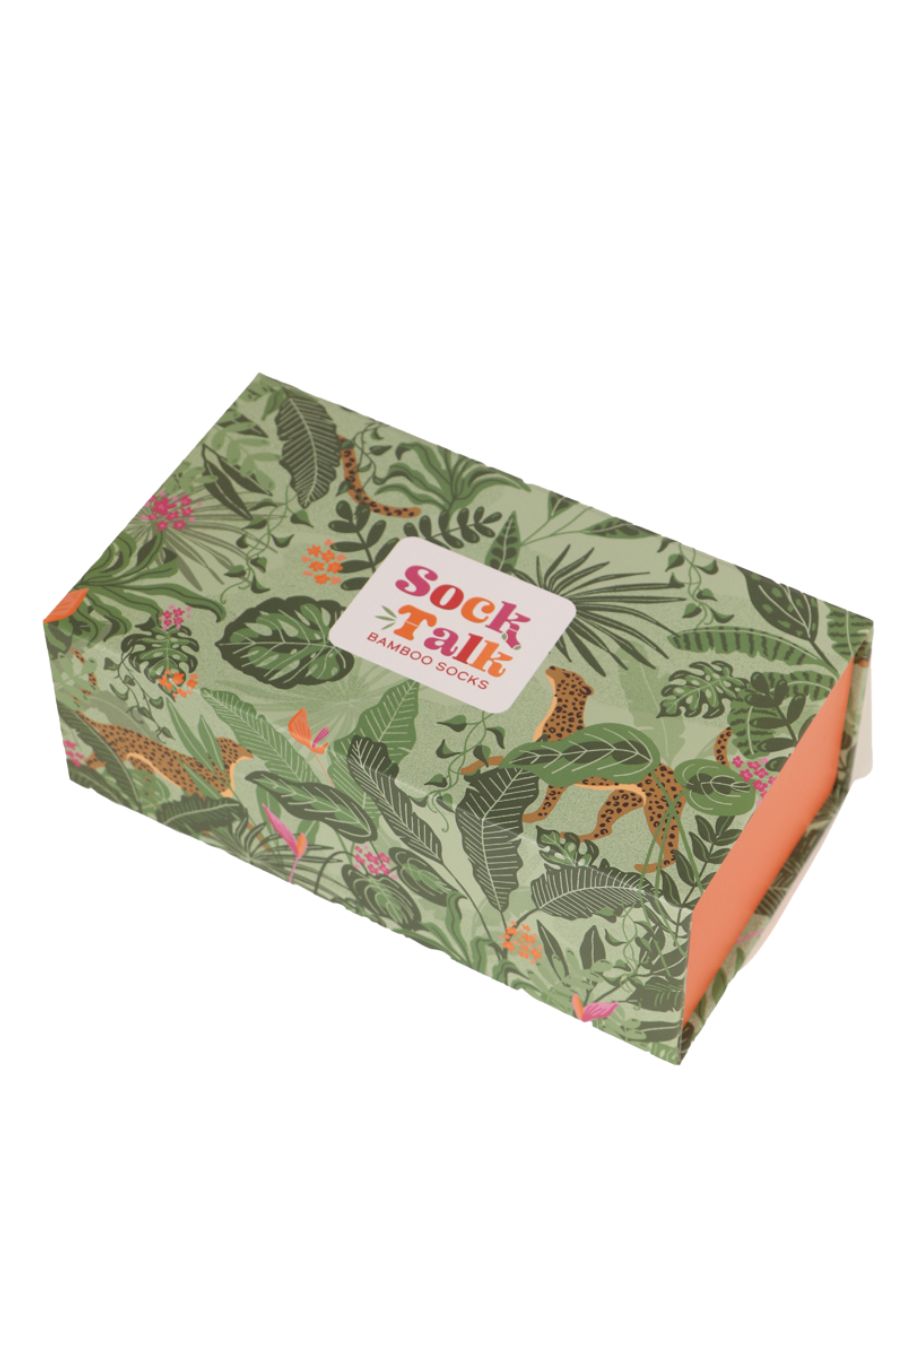 Green Jungle Scene Sock Talk Gift Box (Box Only)